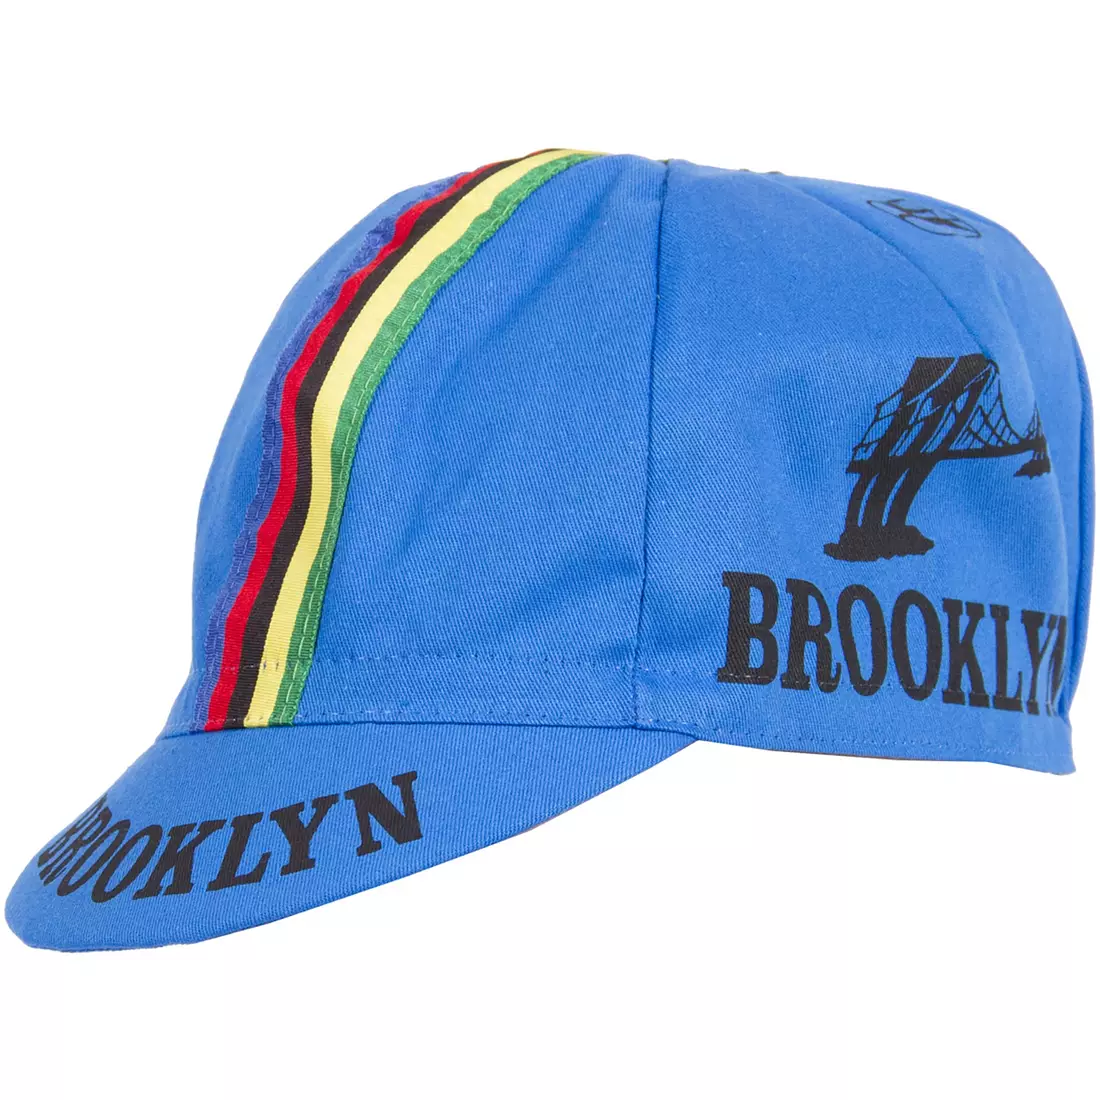 Cyklistická čepice GIORDANA SS18 - Brooklyn - Modrá Azzurro s páskou GI-S6-COCA-BROK-AZZU jedna velikost